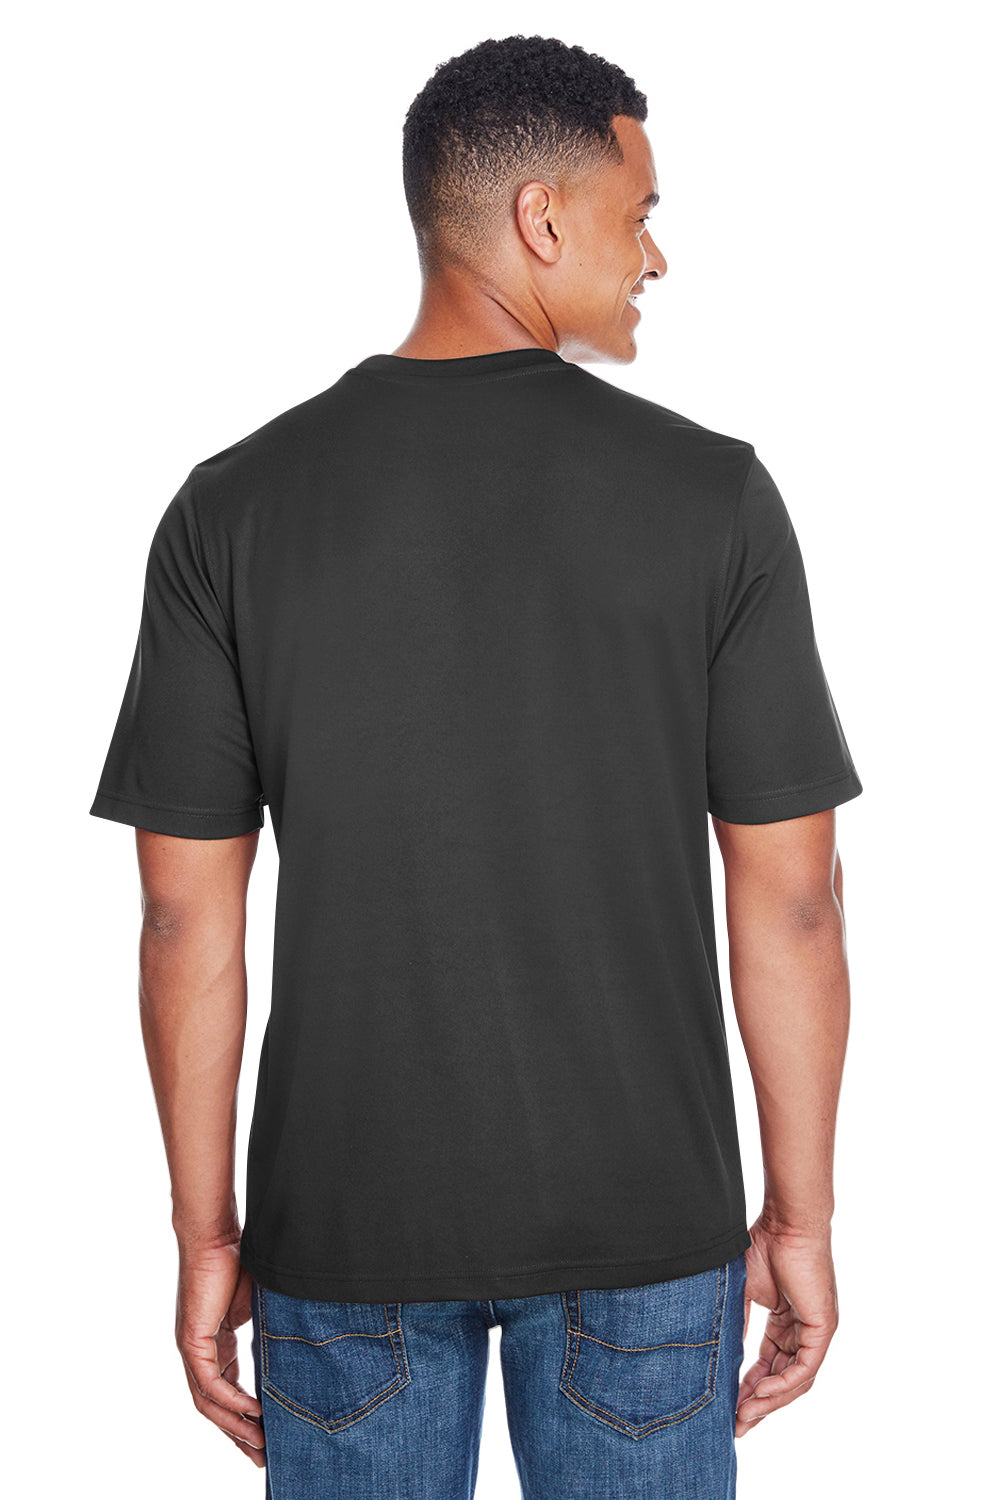 Core 365 88182 Mens Pace Performance Moisture Wicking Short Sleeve Crewneck T-Shirt Carbon Grey Back